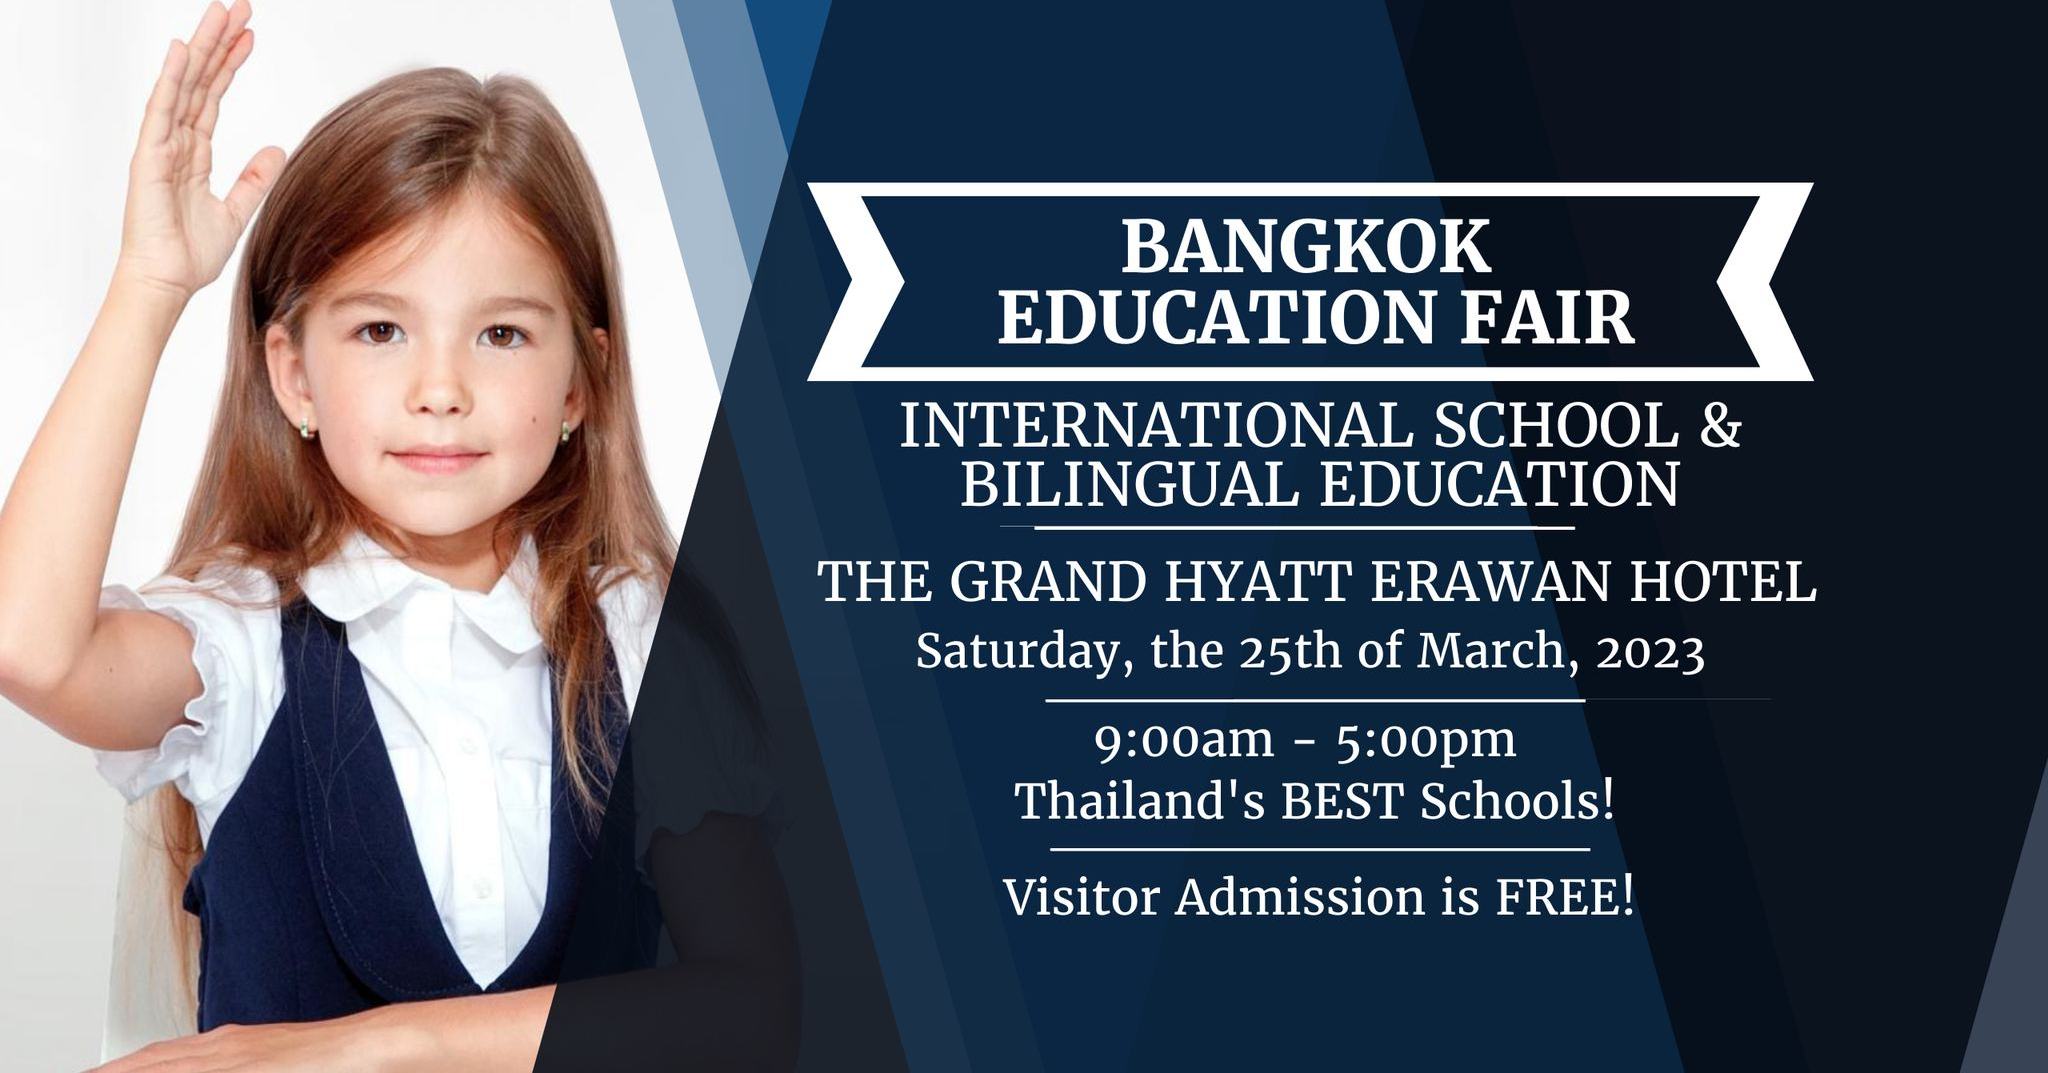 bkk education fair